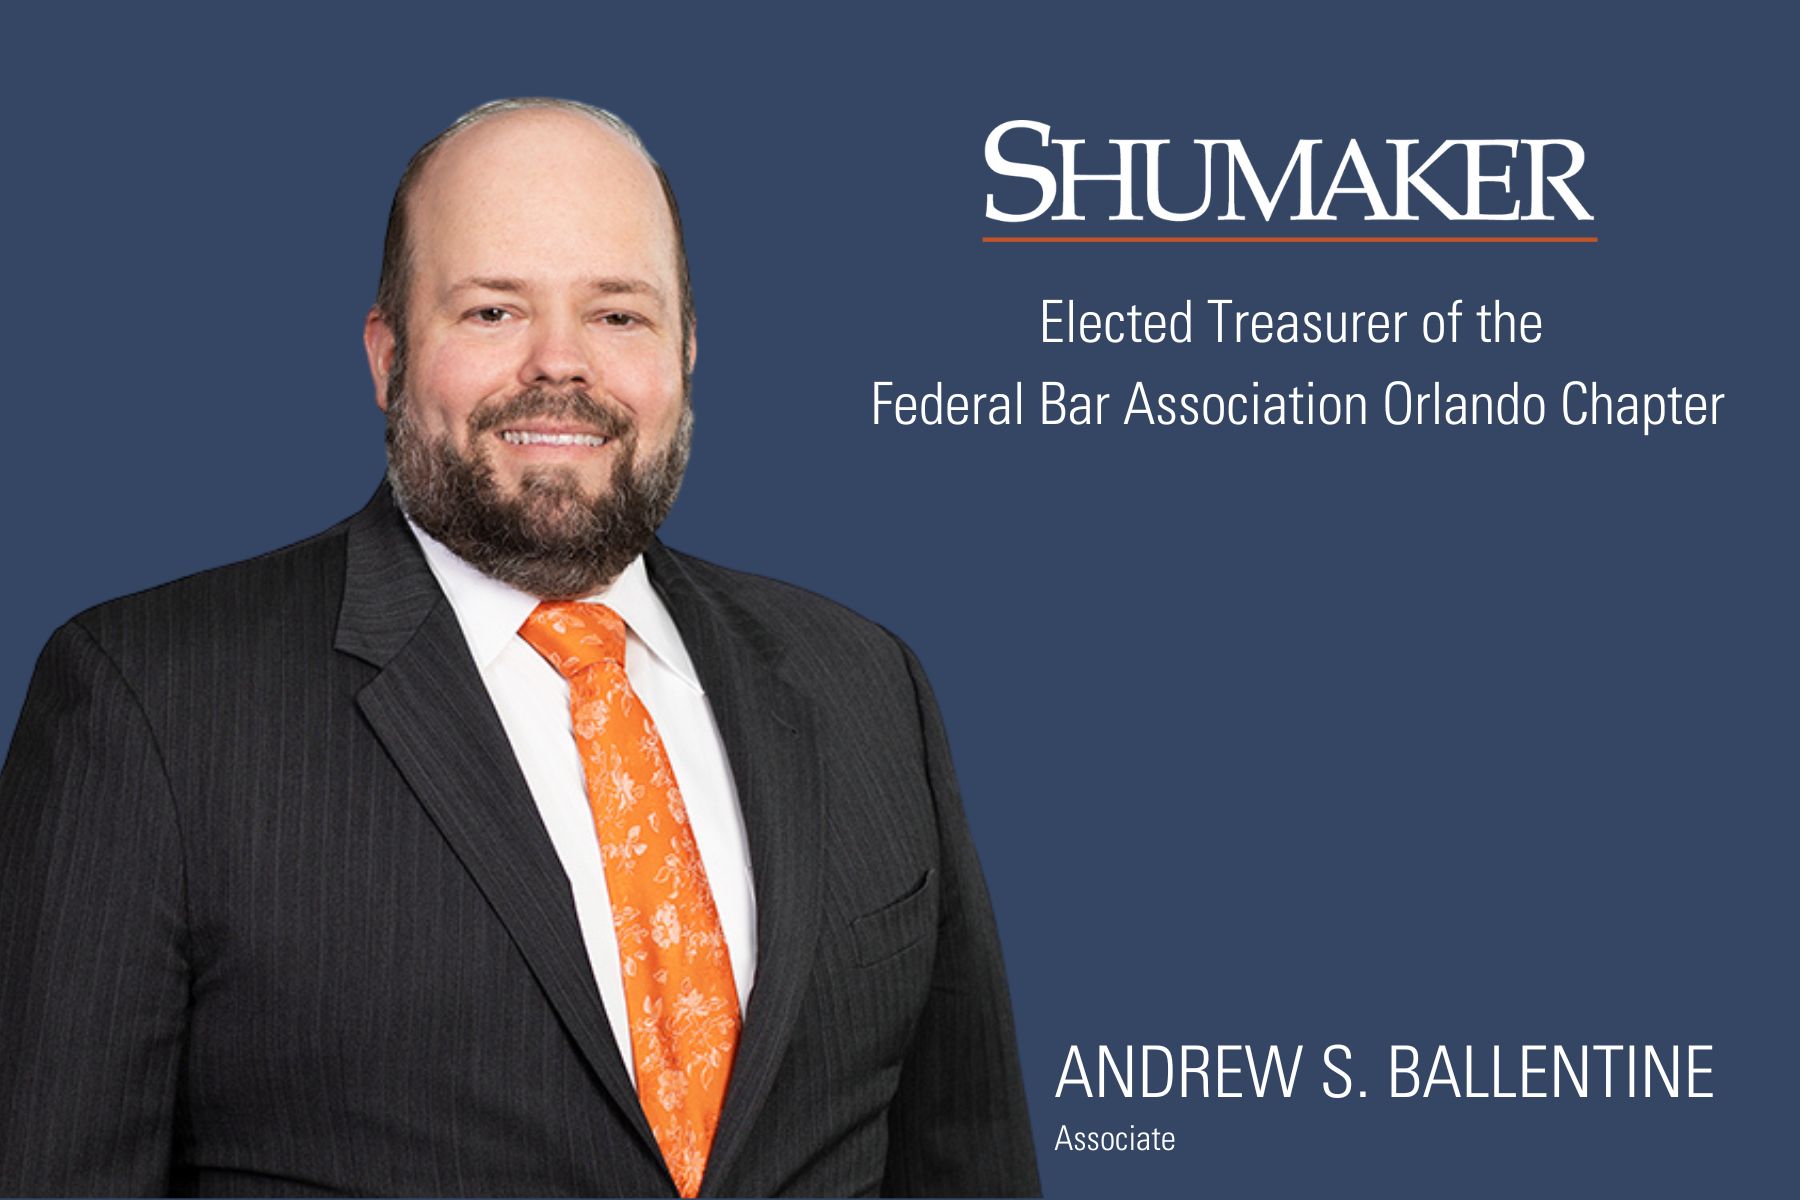 Andrew S. Ballentine Elected Treasurer of Orlando Chapter Federal Bar Association